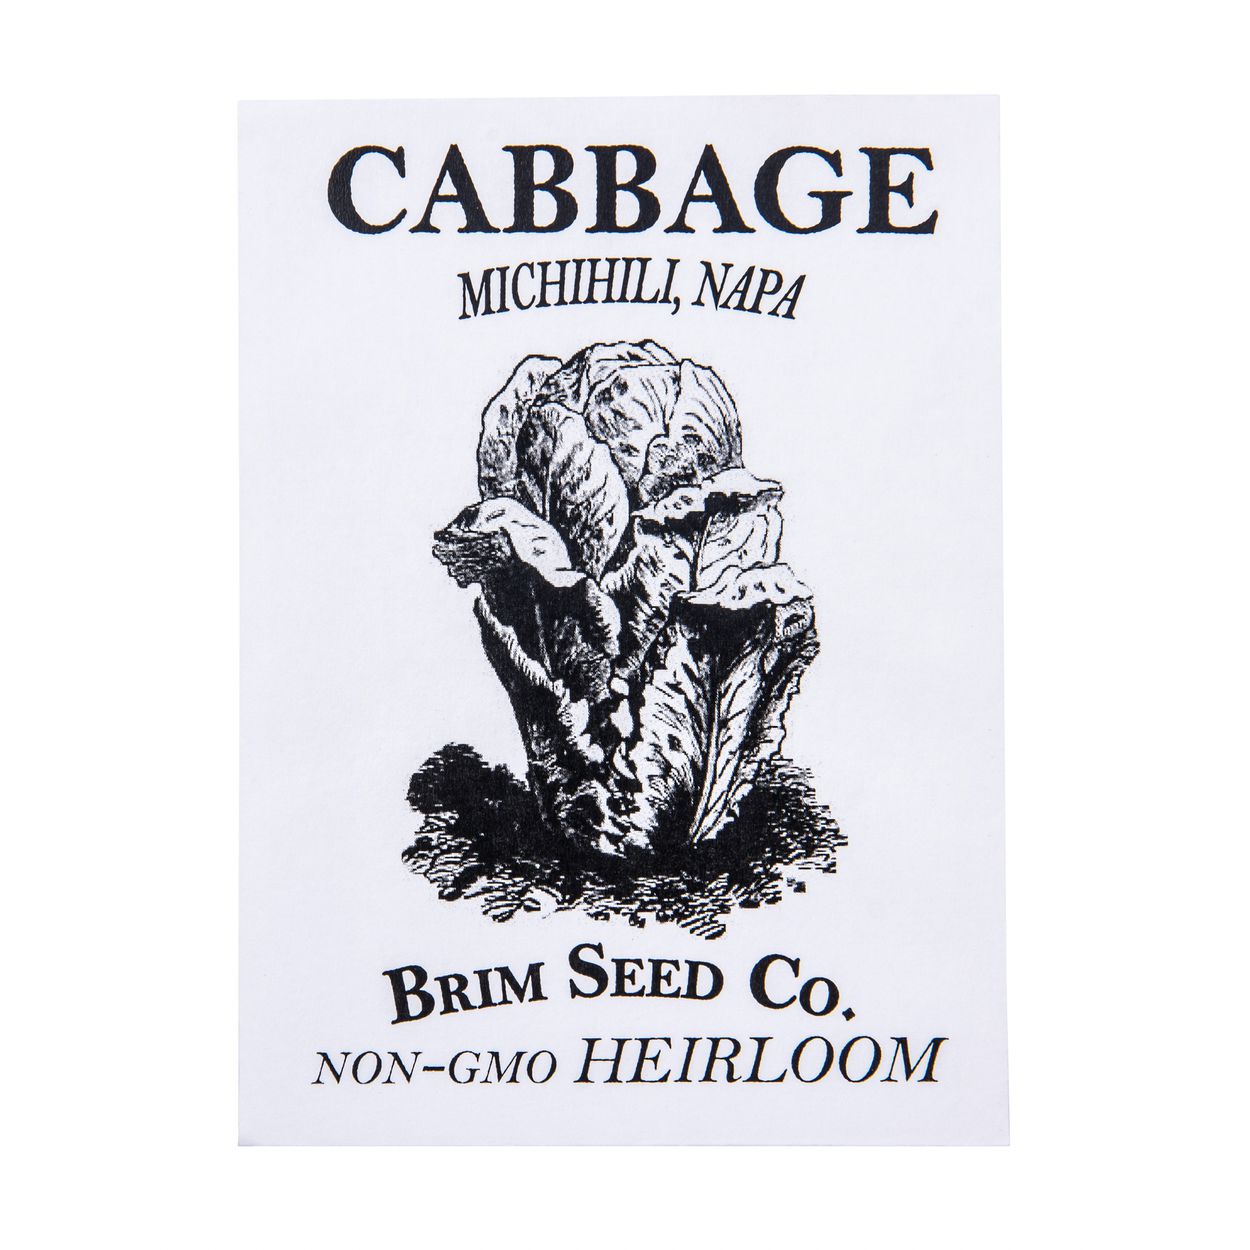 Brim Seed Co. - Michihili Napa Cabbage Heirloom Seed